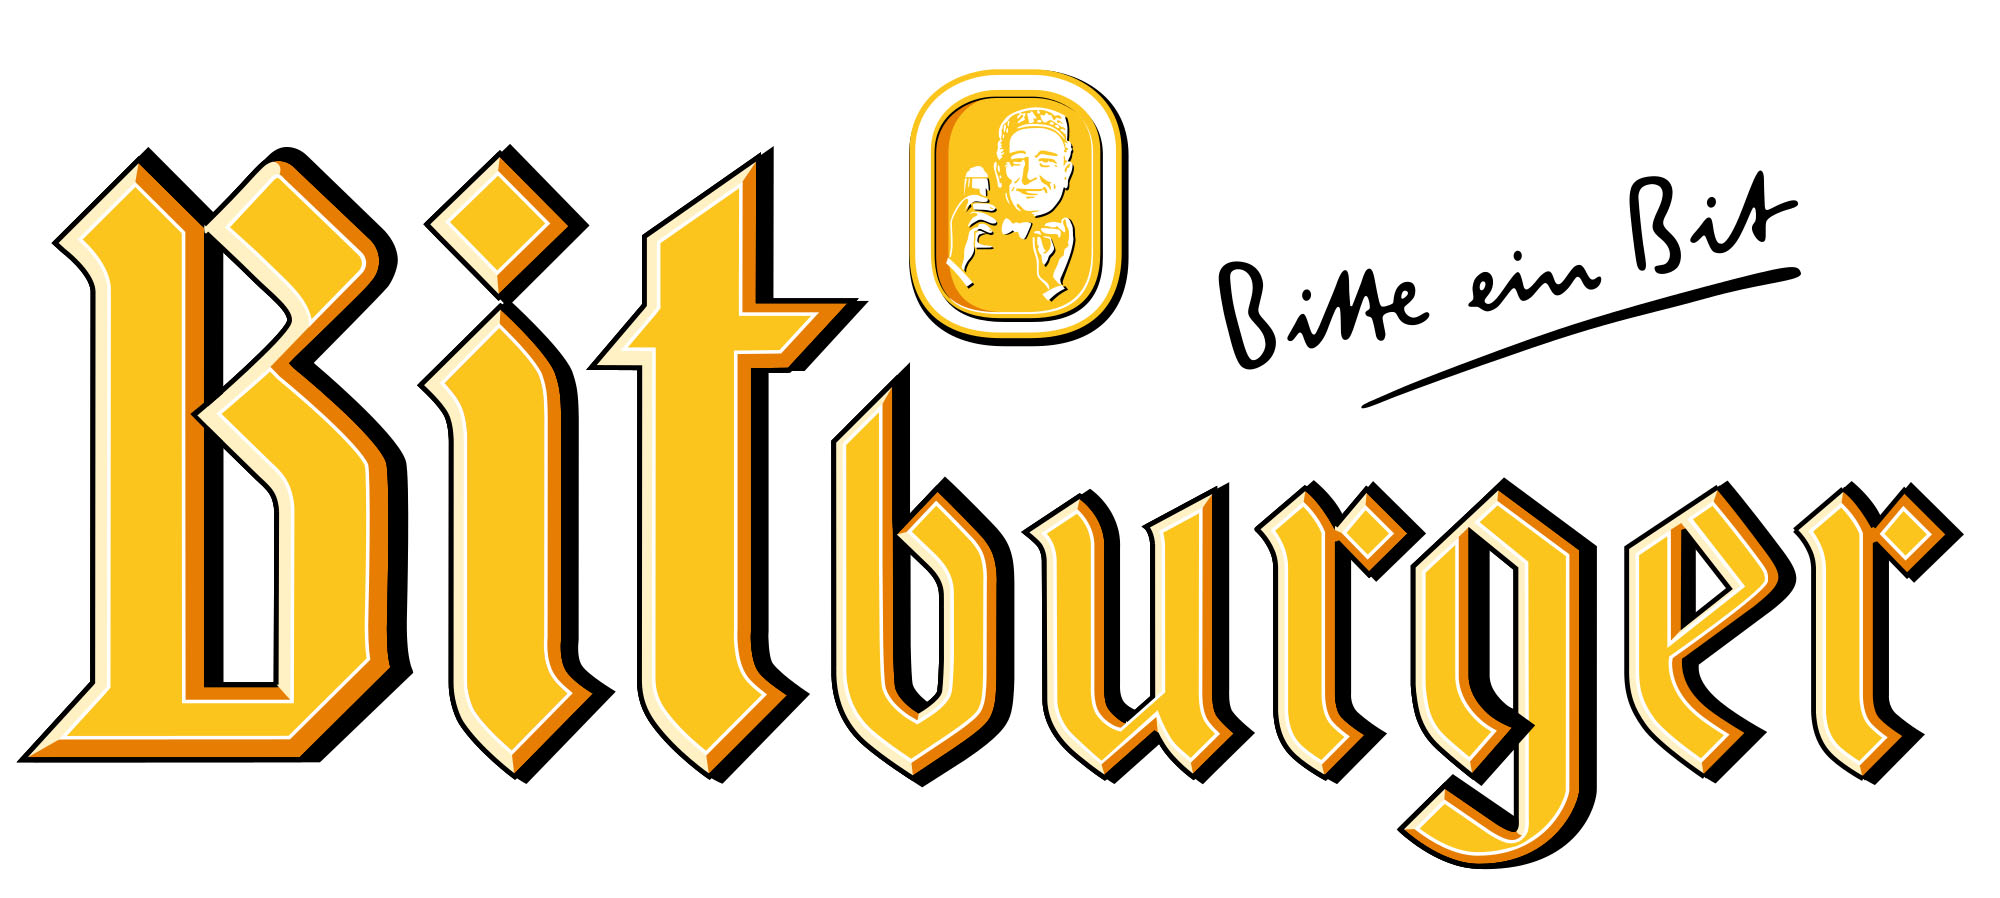 Logo of Piquee's client Bitburger